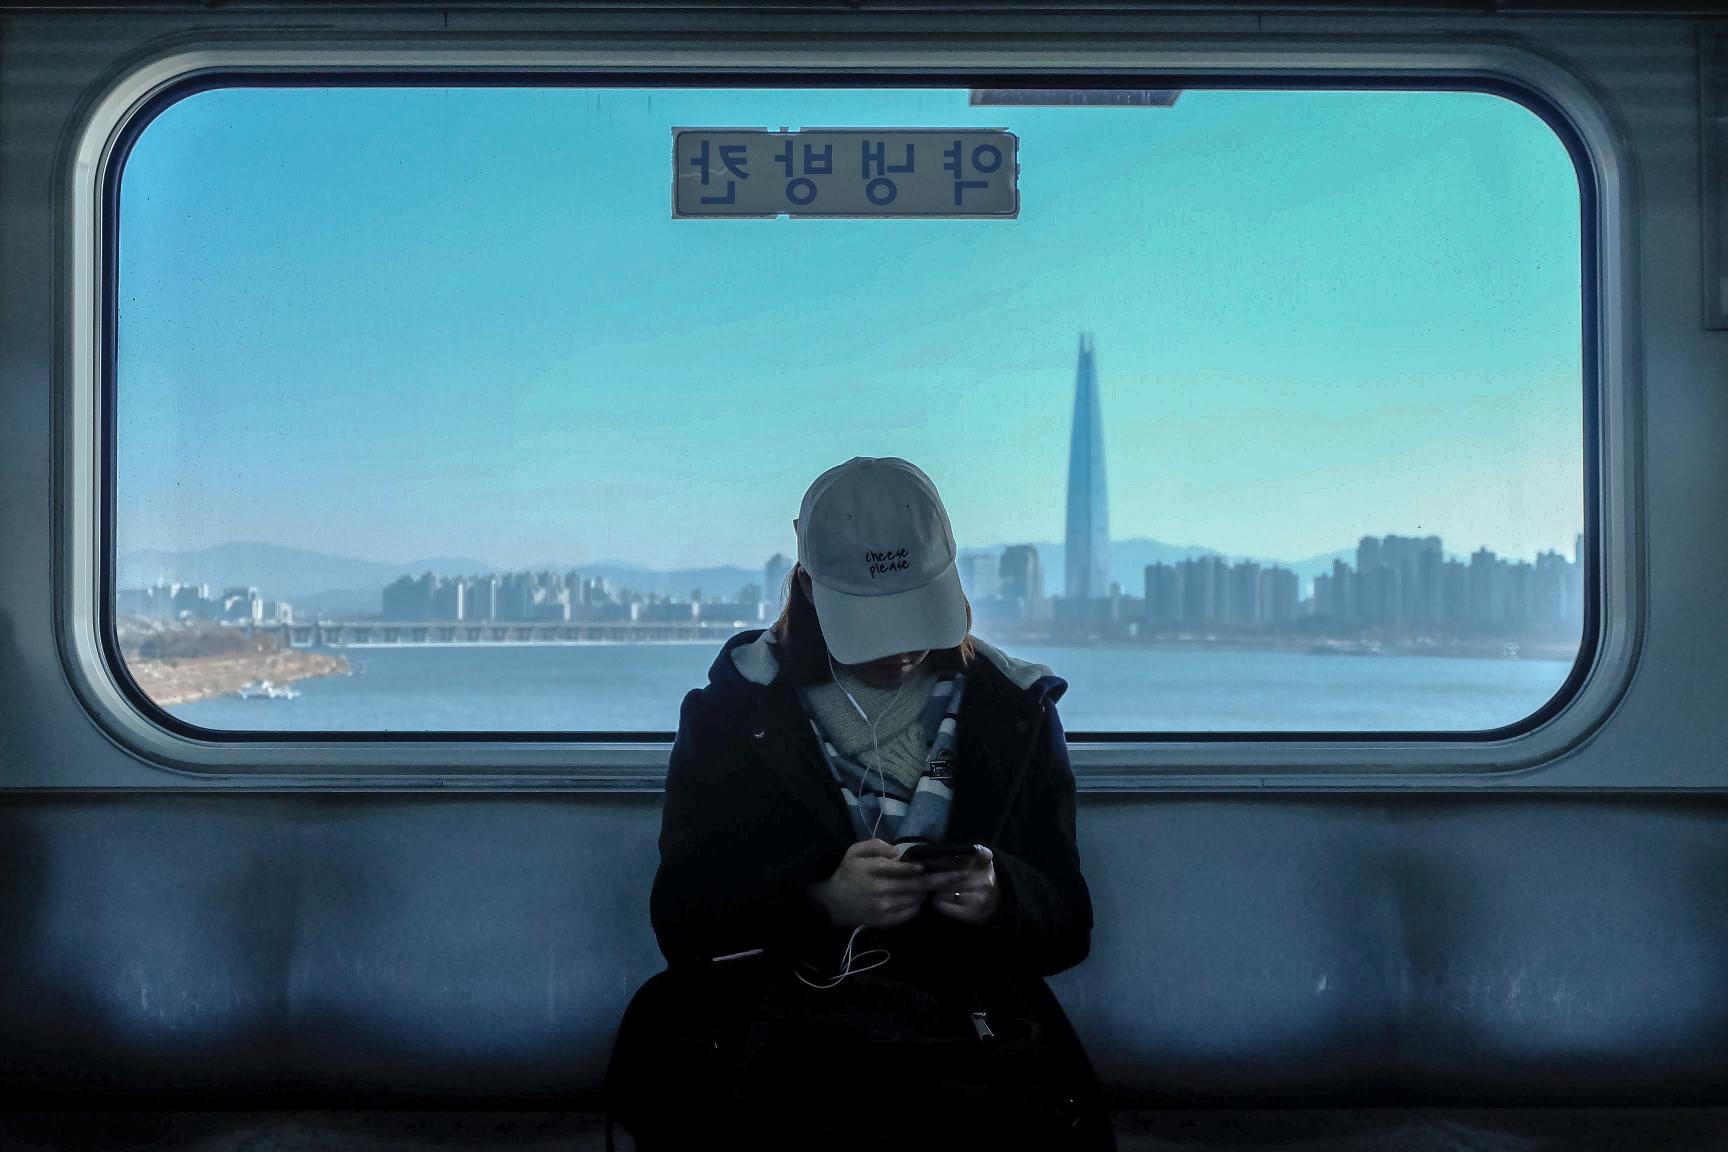 images/post/seoul-subway-lotte-tower.jpg